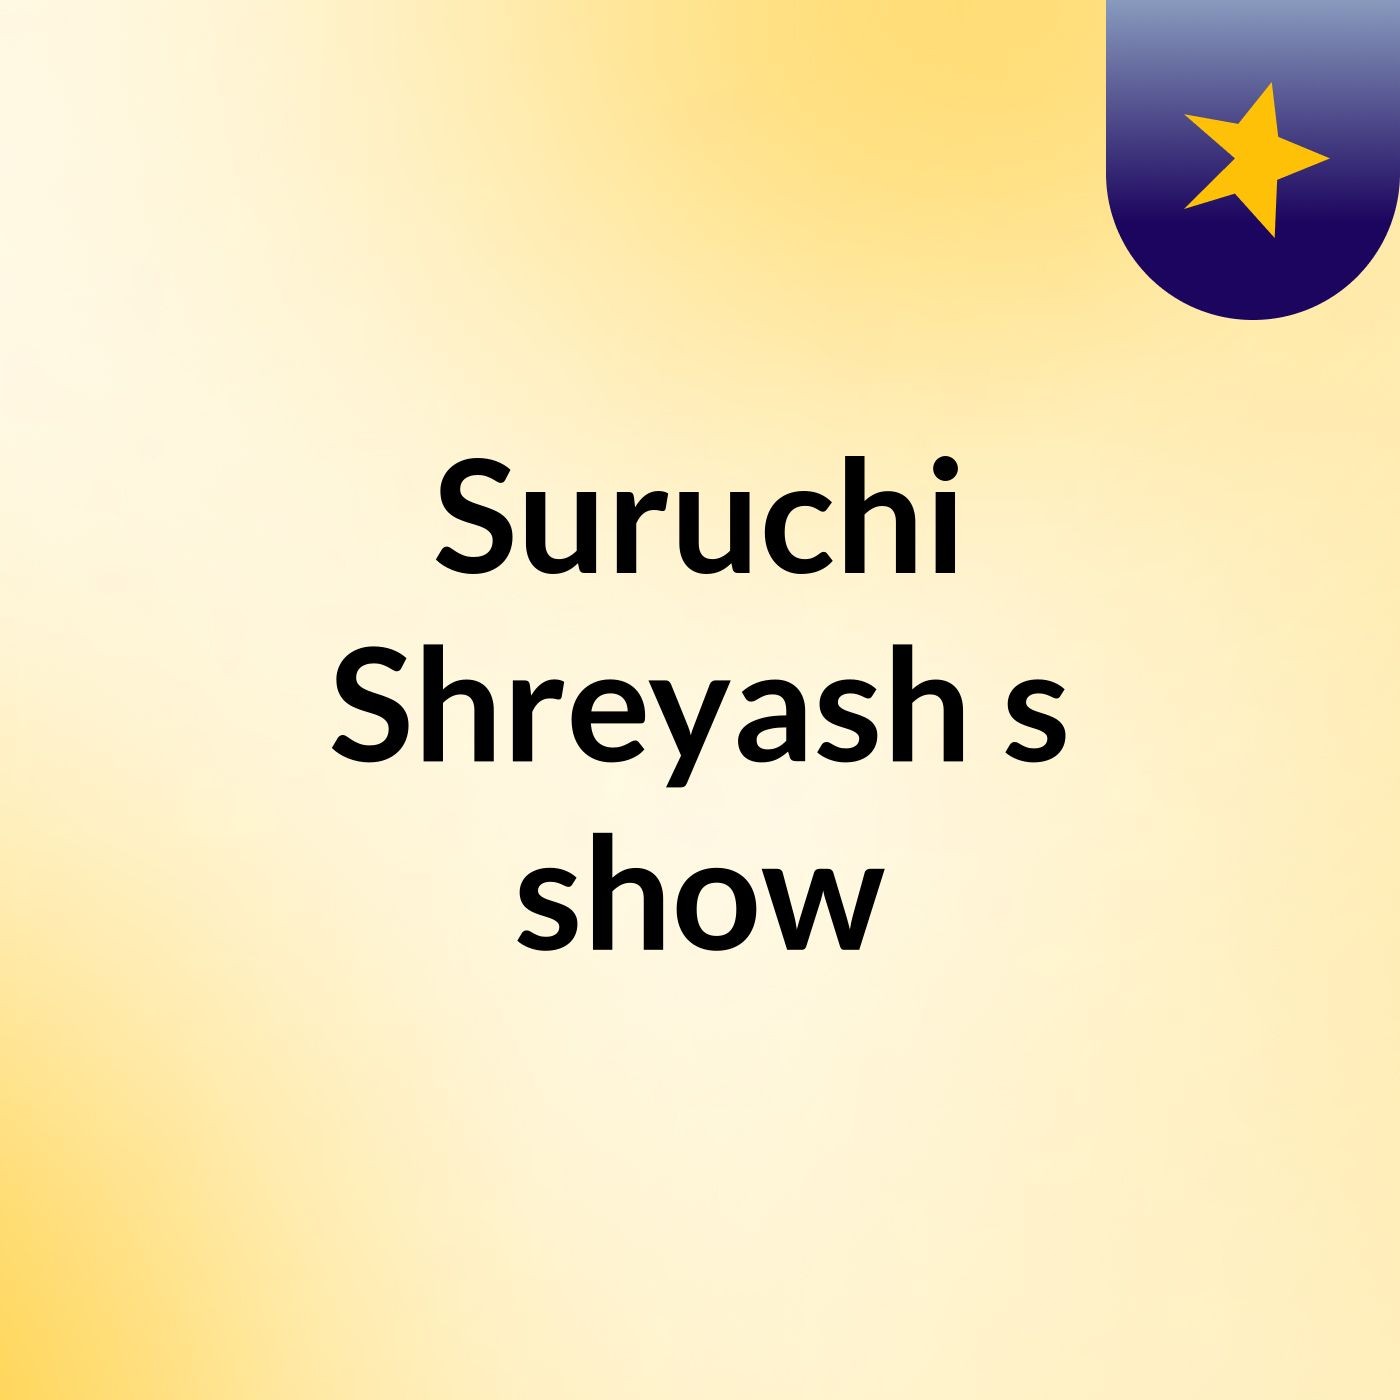 Suruchi Shreyash's show